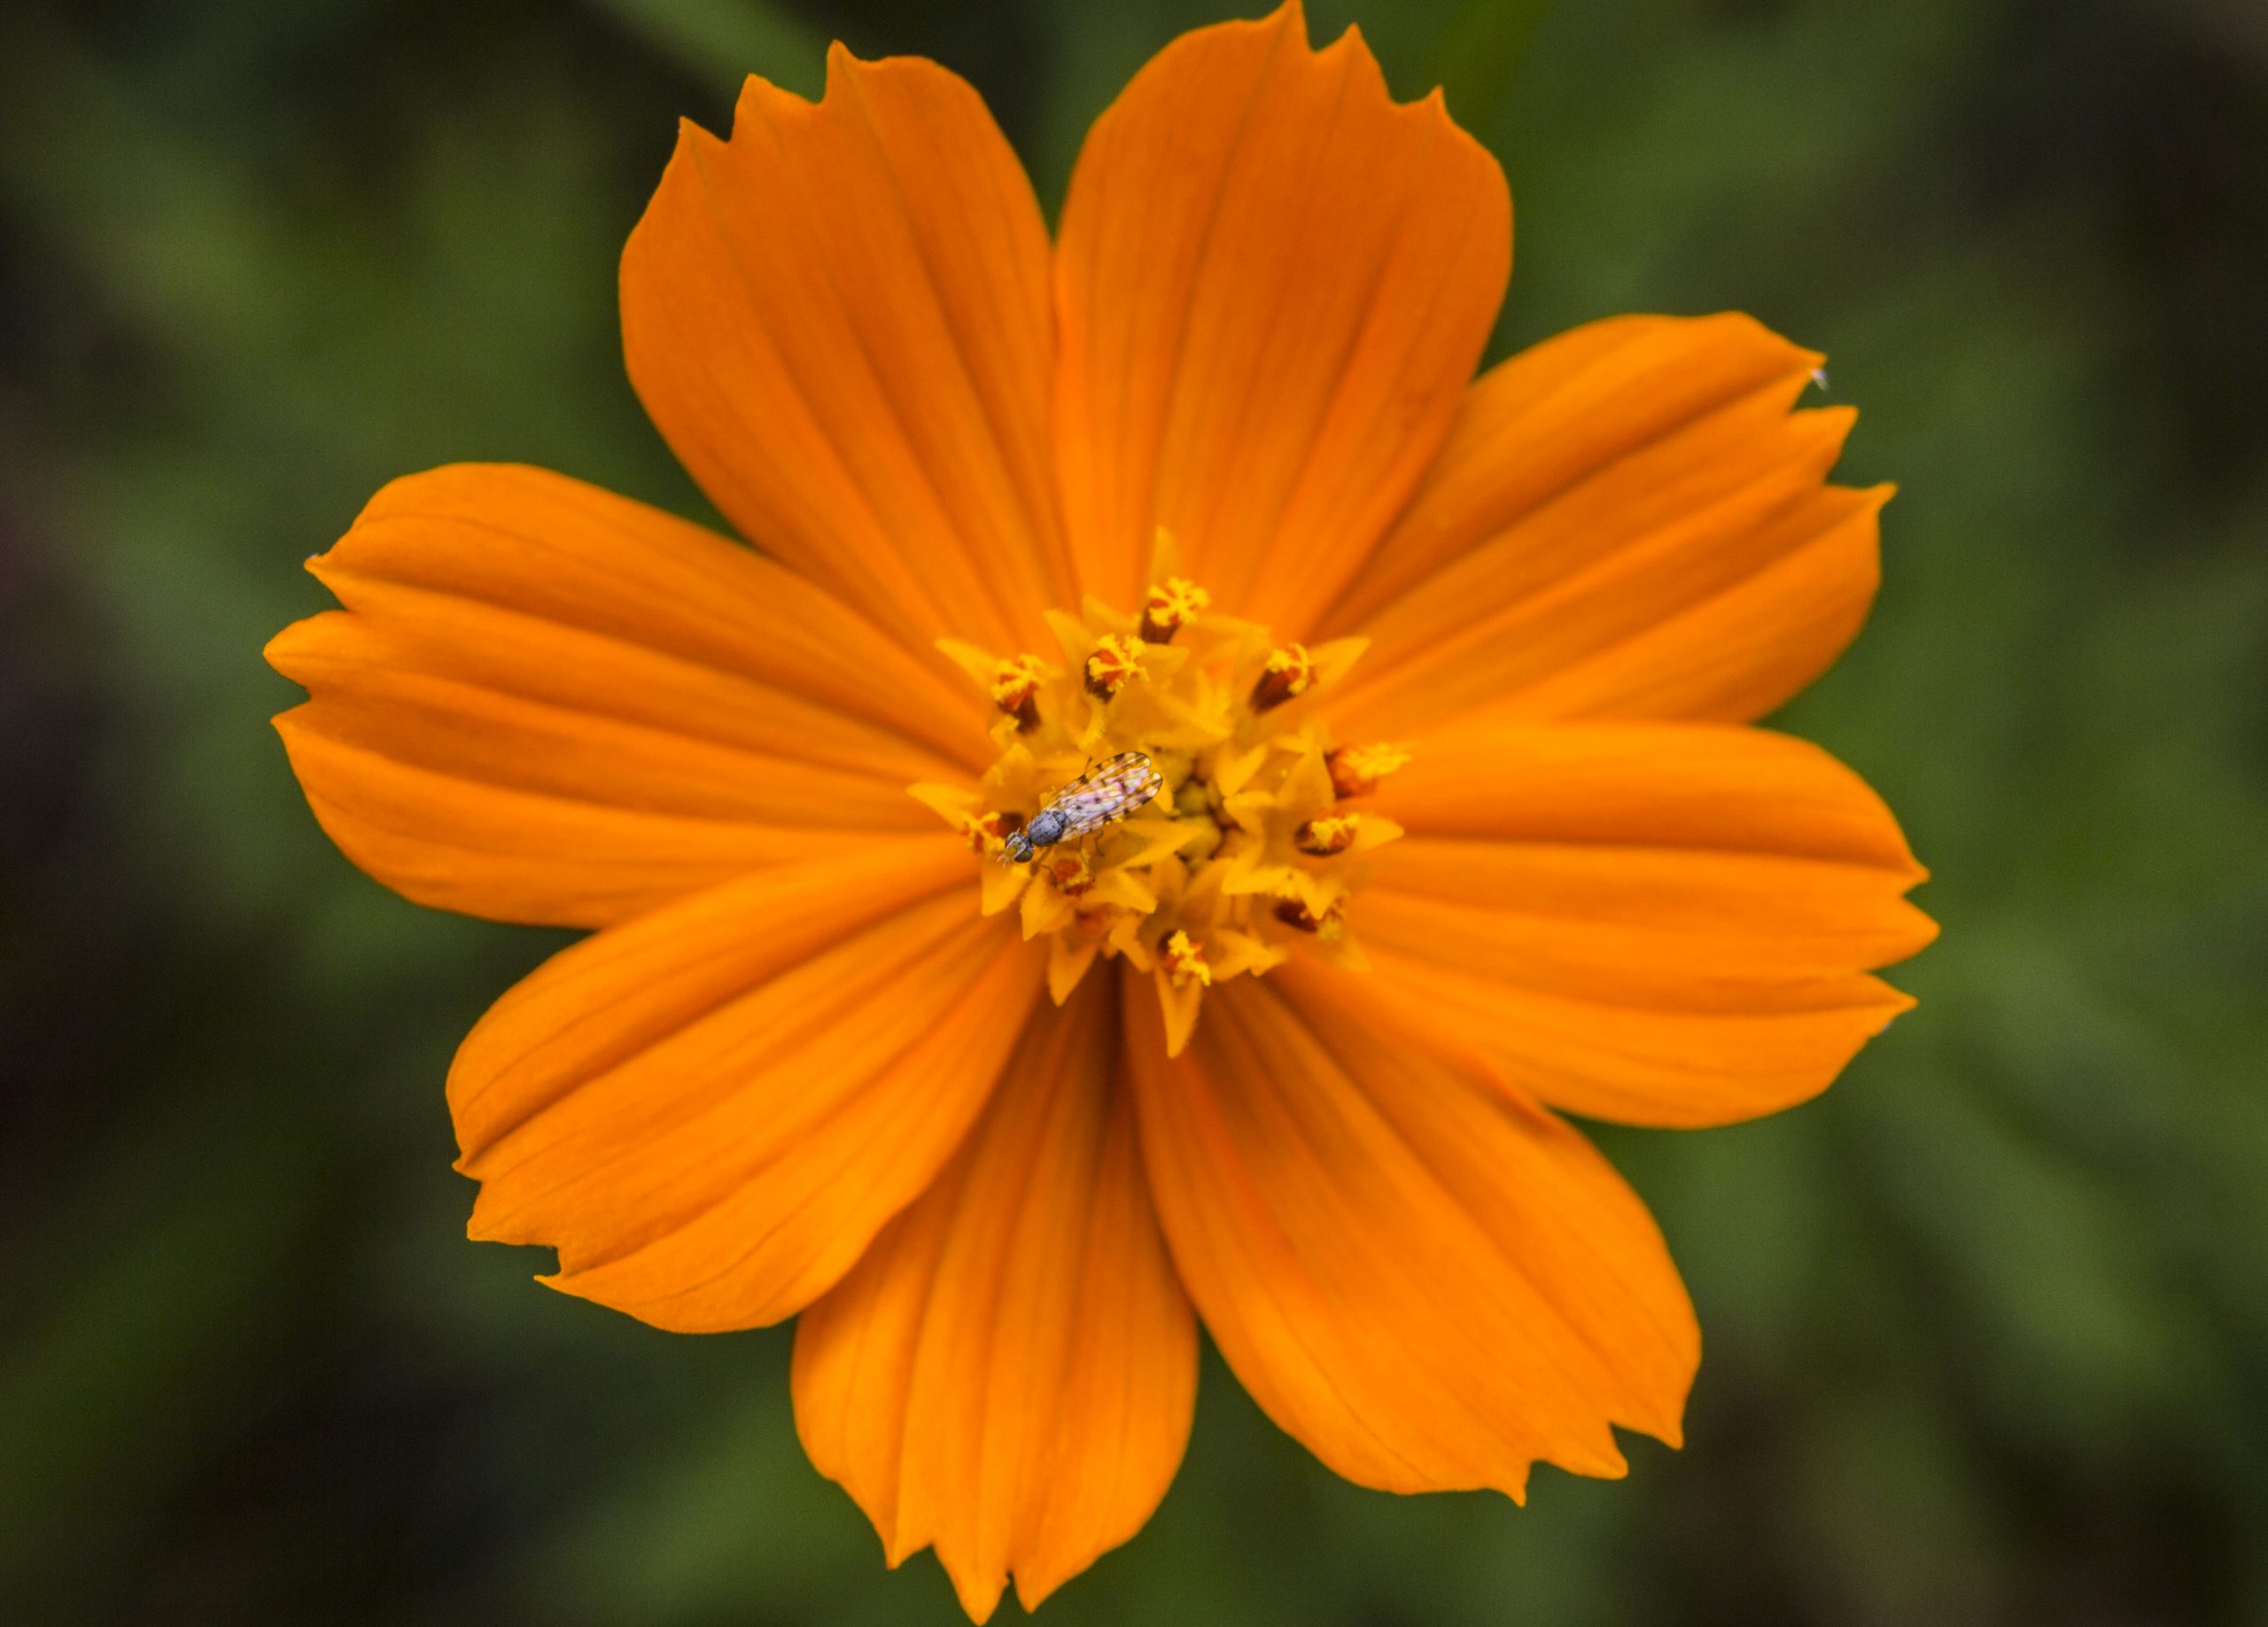 insect on orange zenia flower